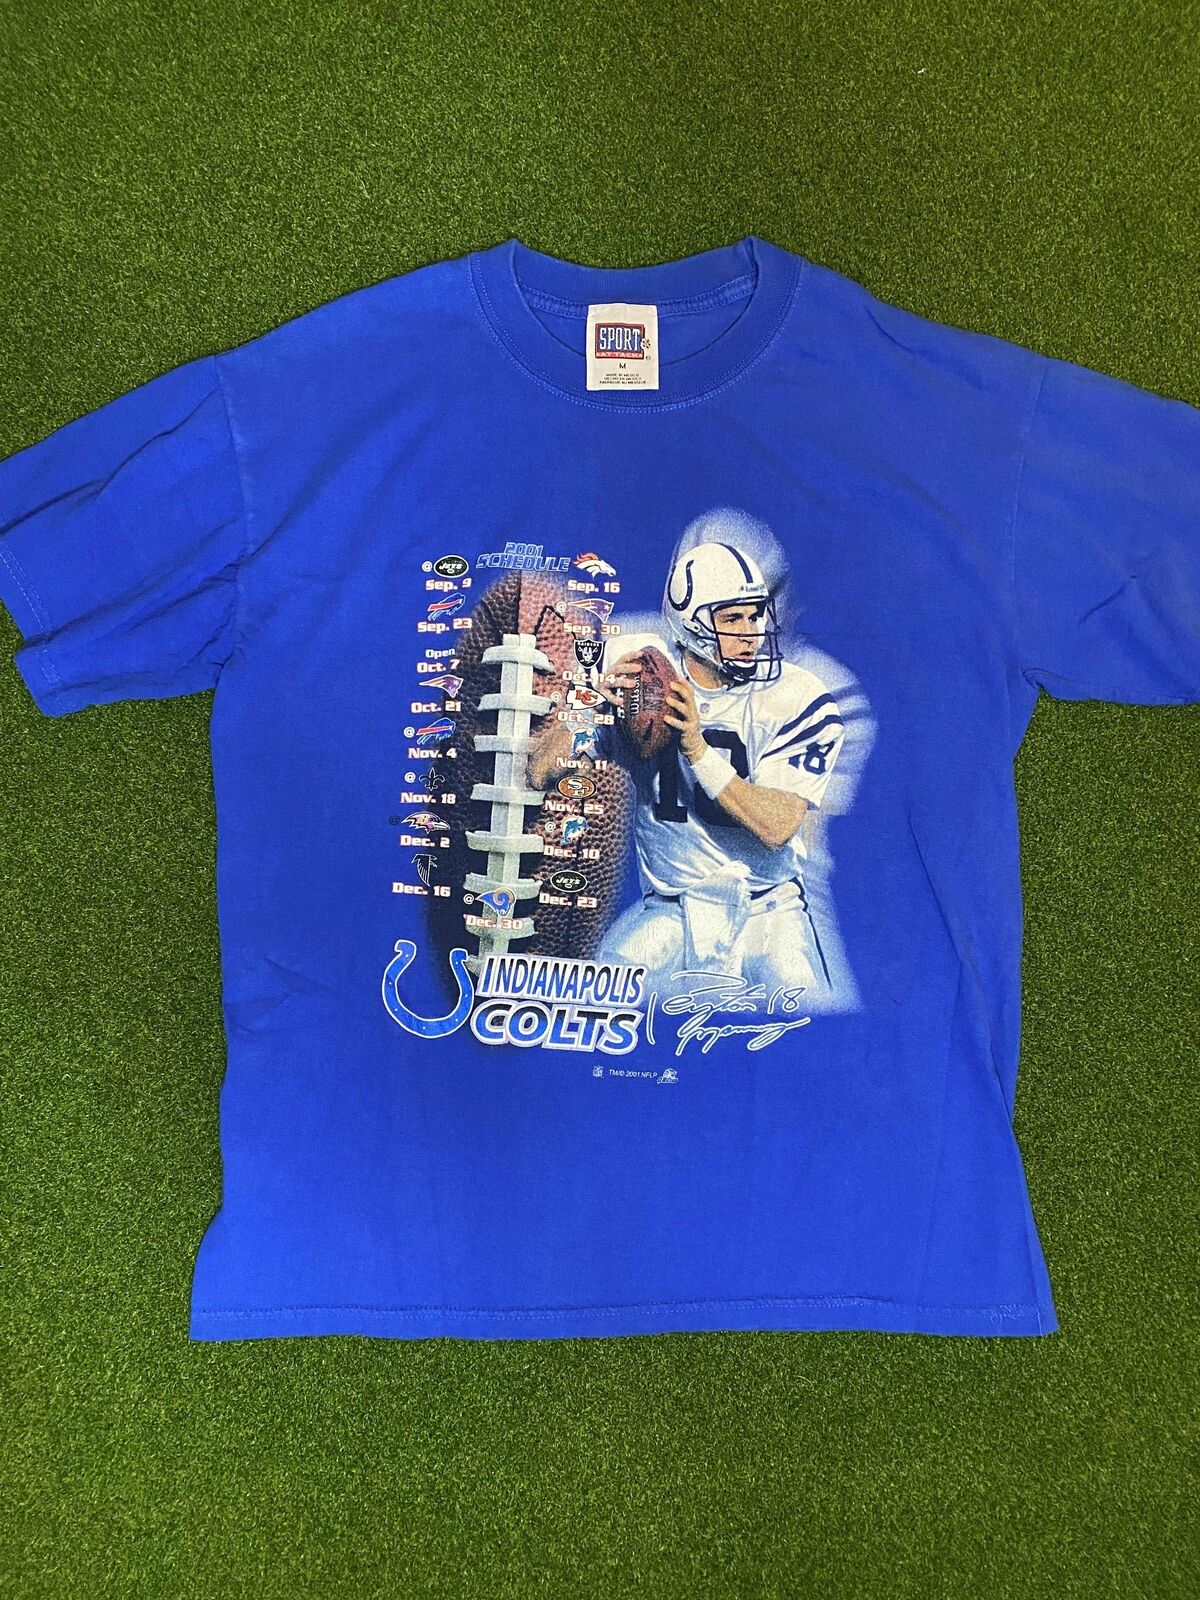 2001 Indianapolis Colts - Peyton Manning - Vintage NFL Player Tee Shirt (Medium)